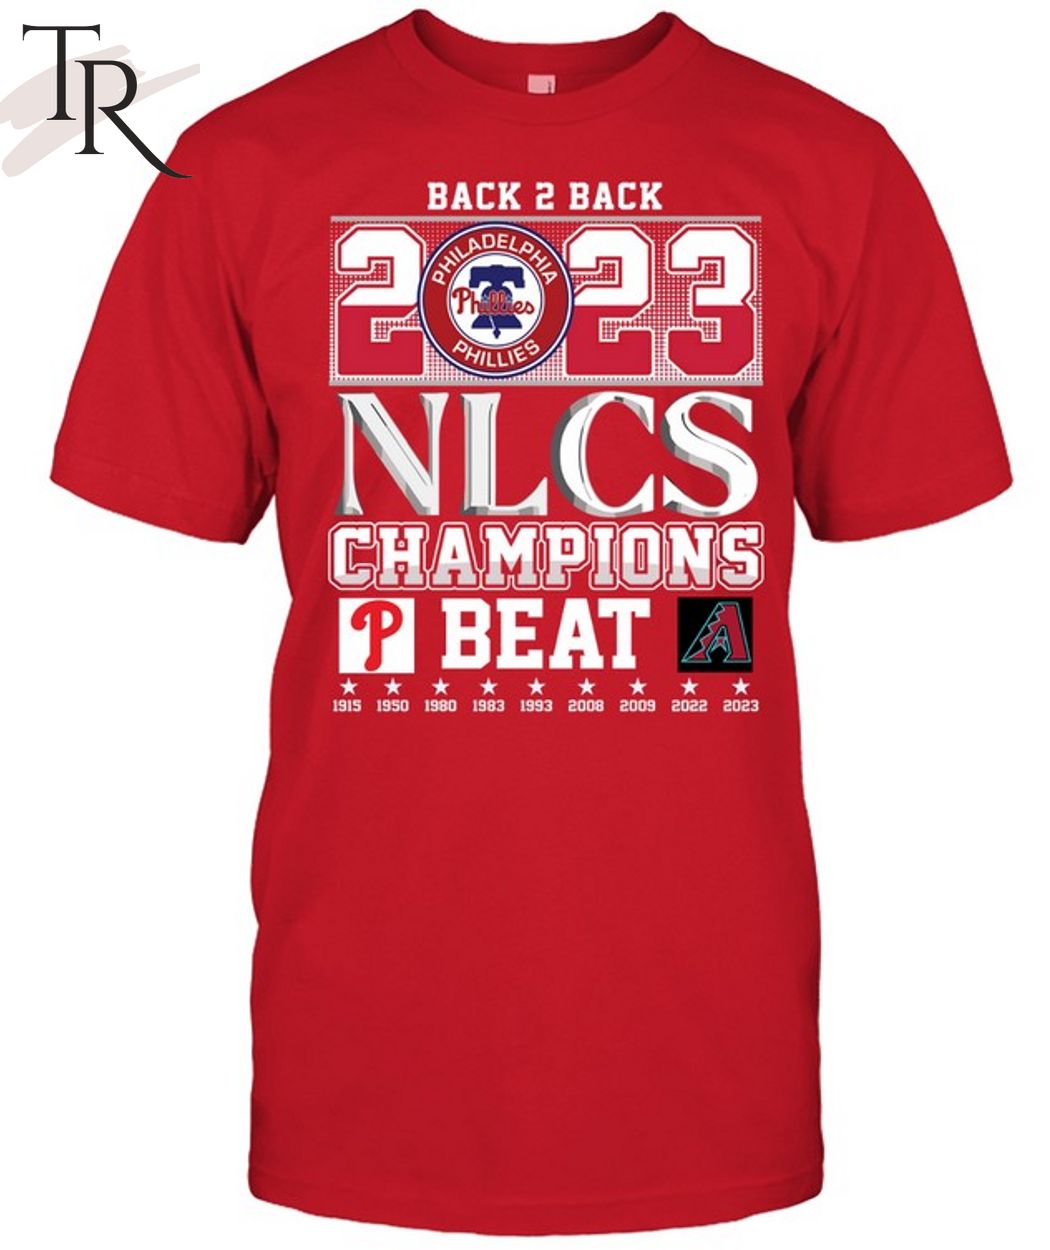 Back 2 Back 2023 NLCS Champions Philadelphia Phillies Beat Arizona